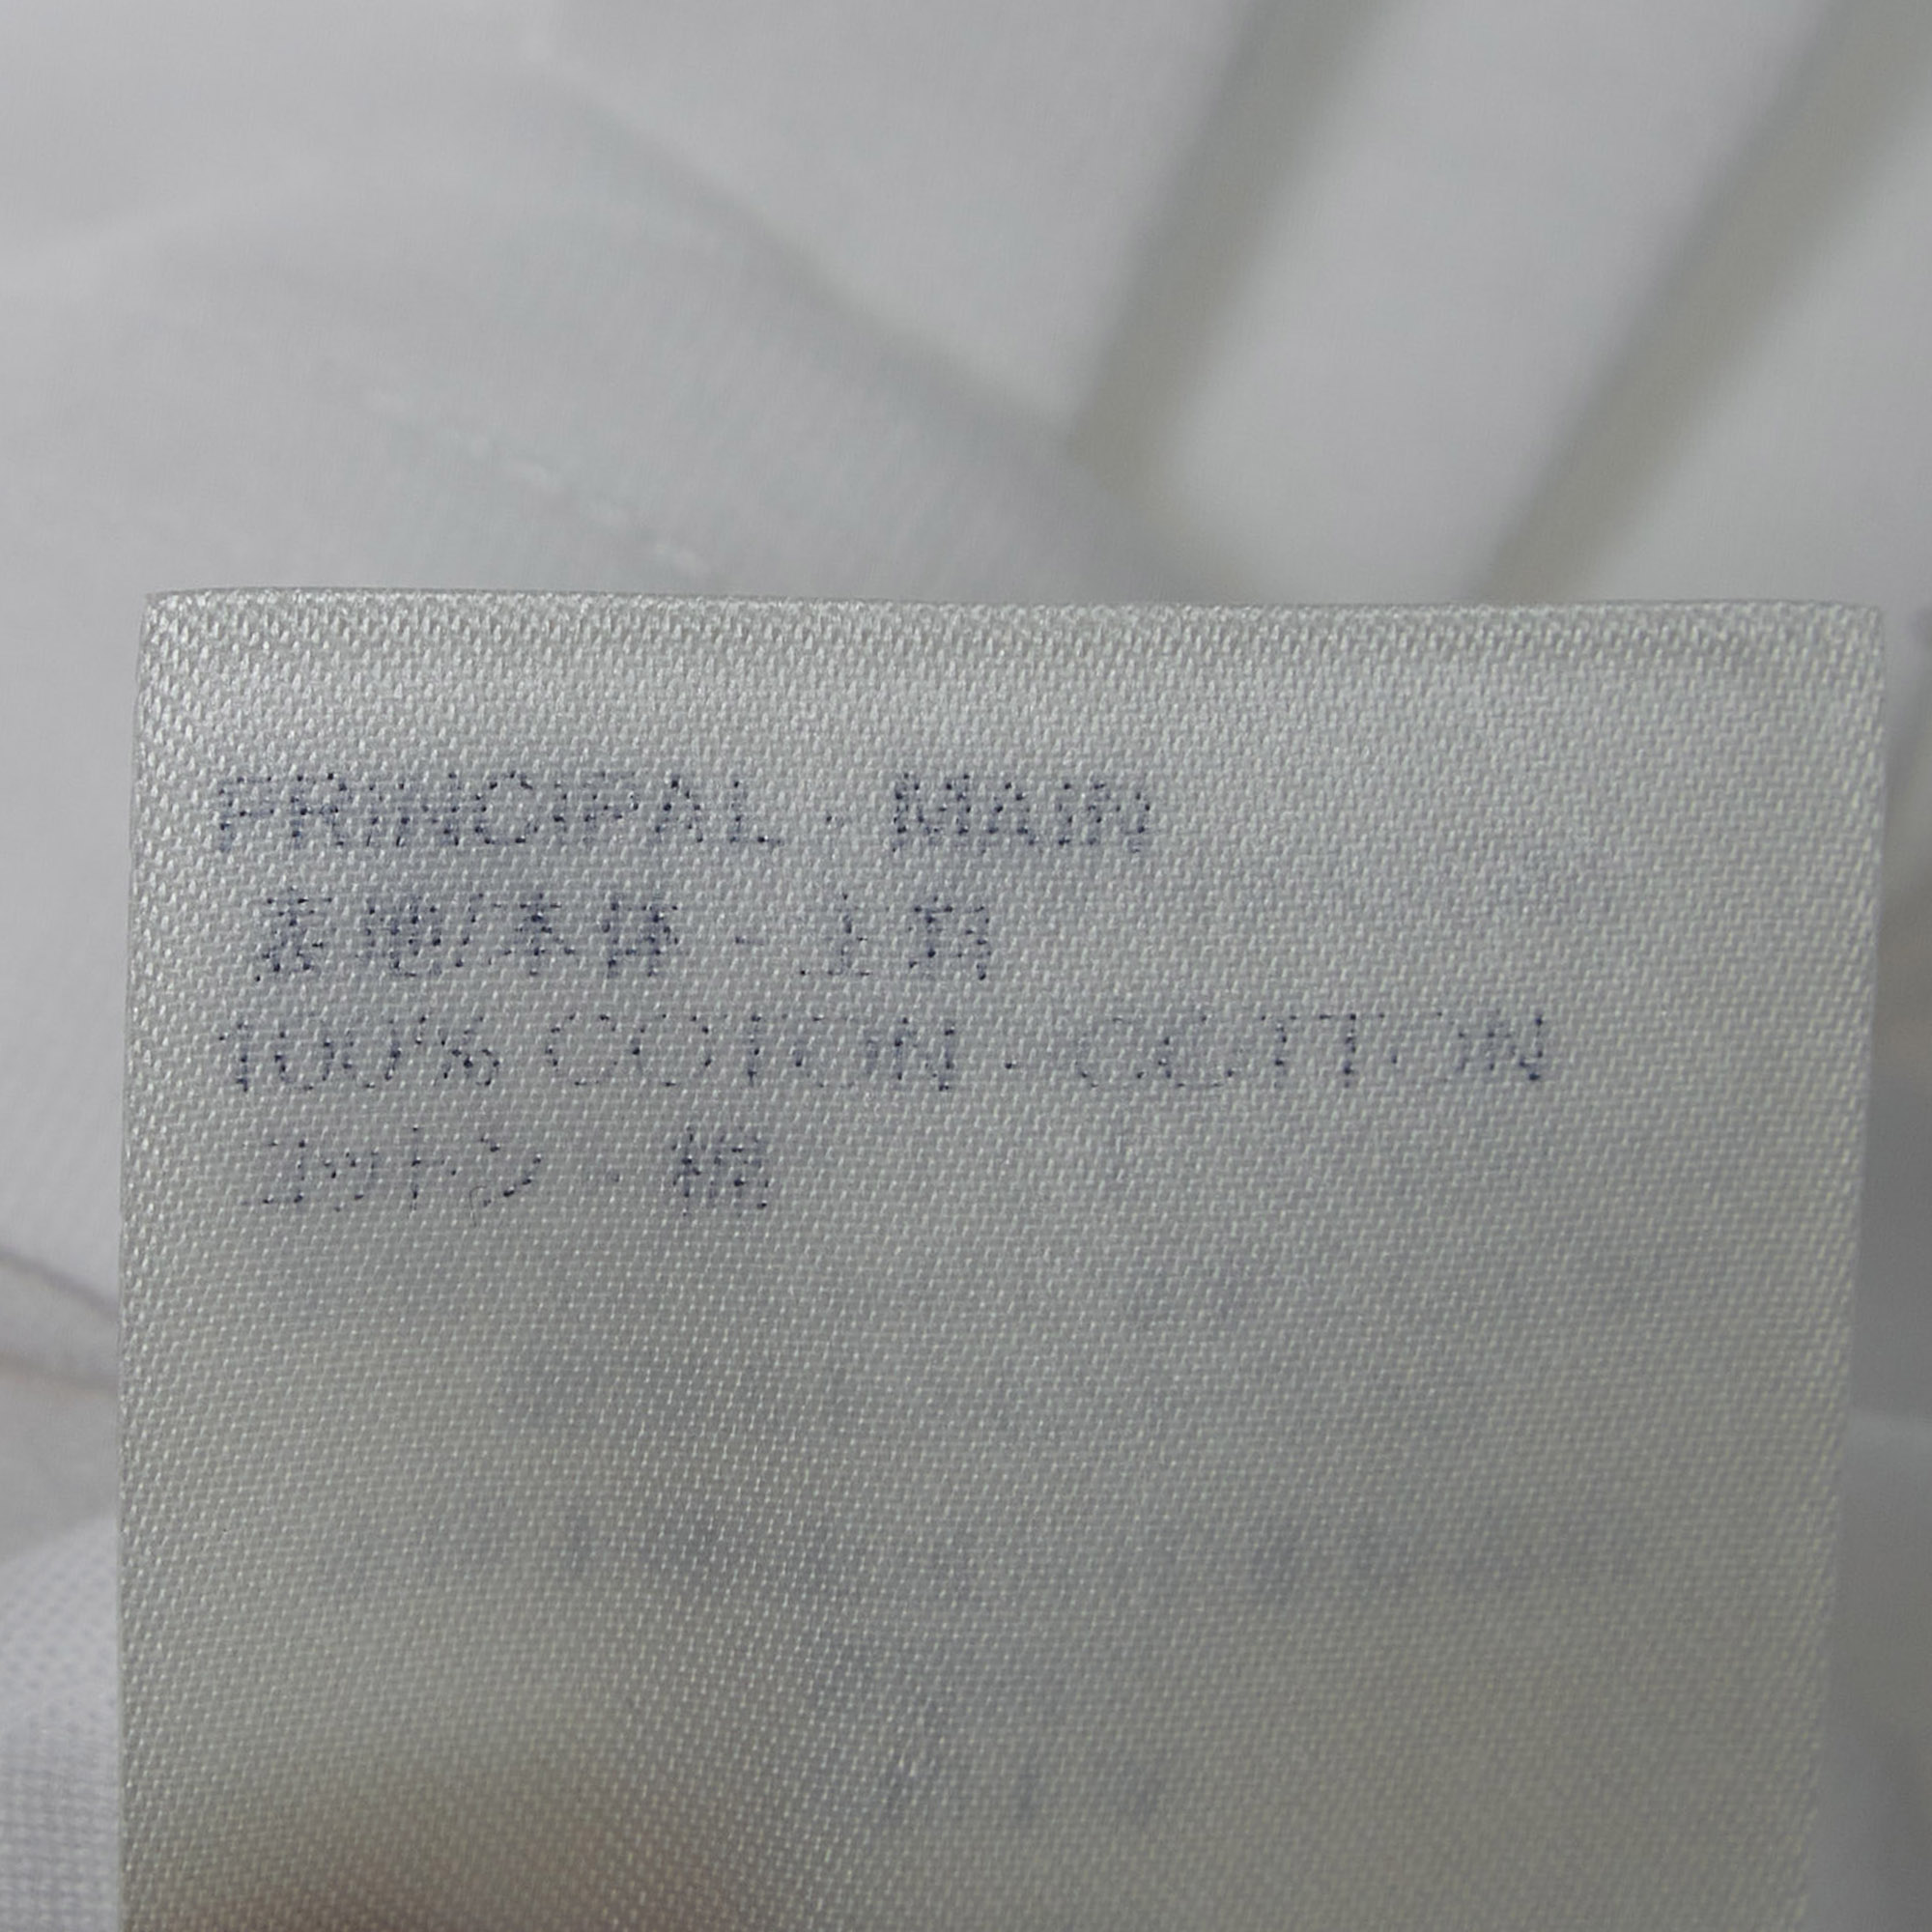 Louis Vuitton White Logo Embroidered Cotton Half Sleeve T-Shirt L